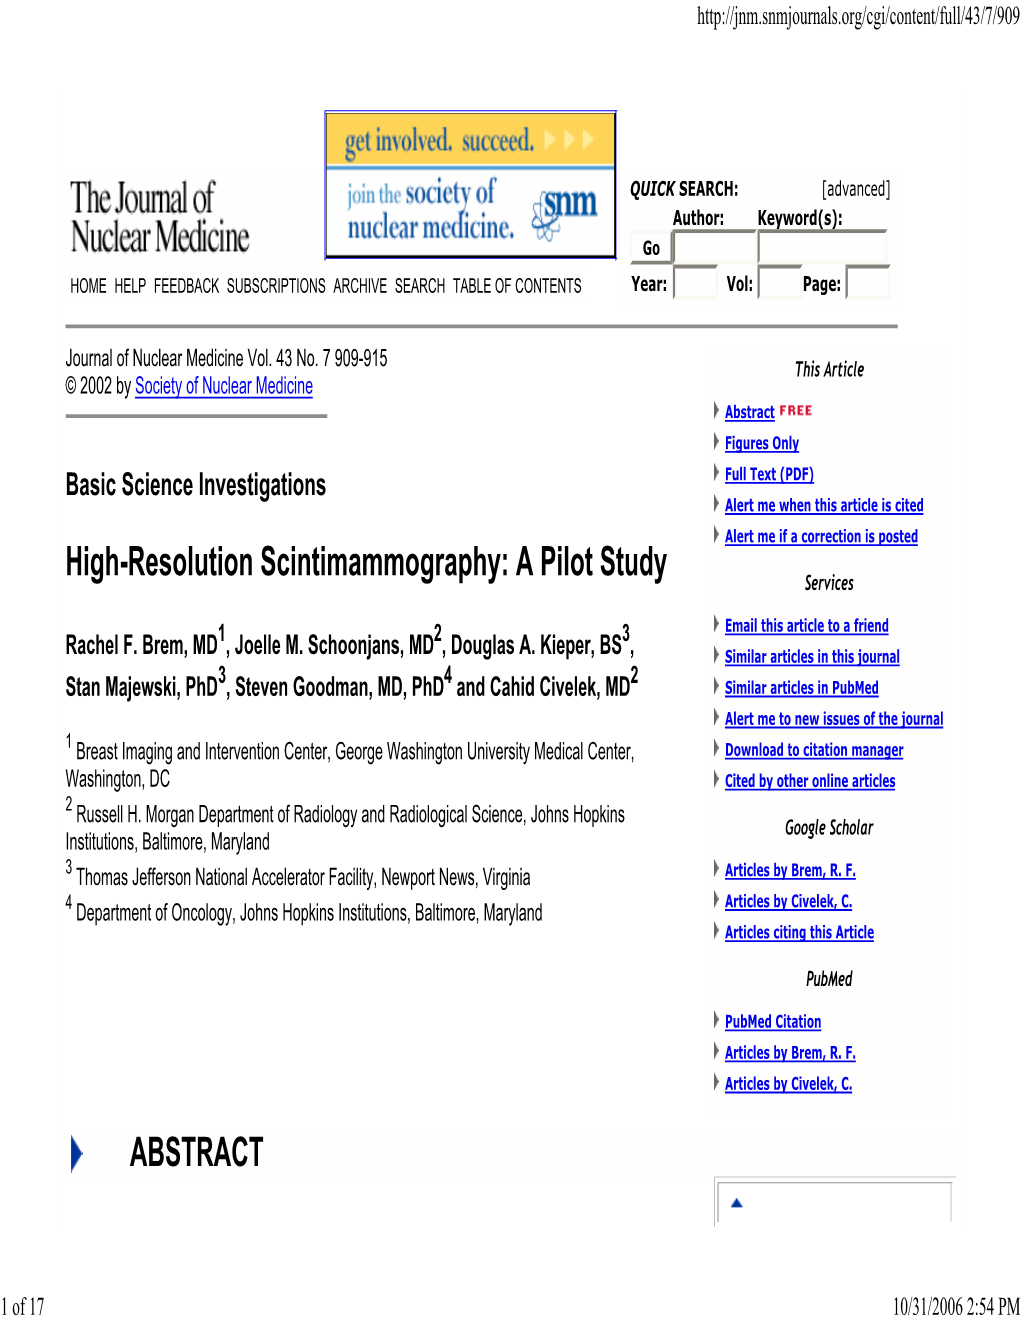 High-Resolution Scintimammography: a Pilot Study -- Brem Et A